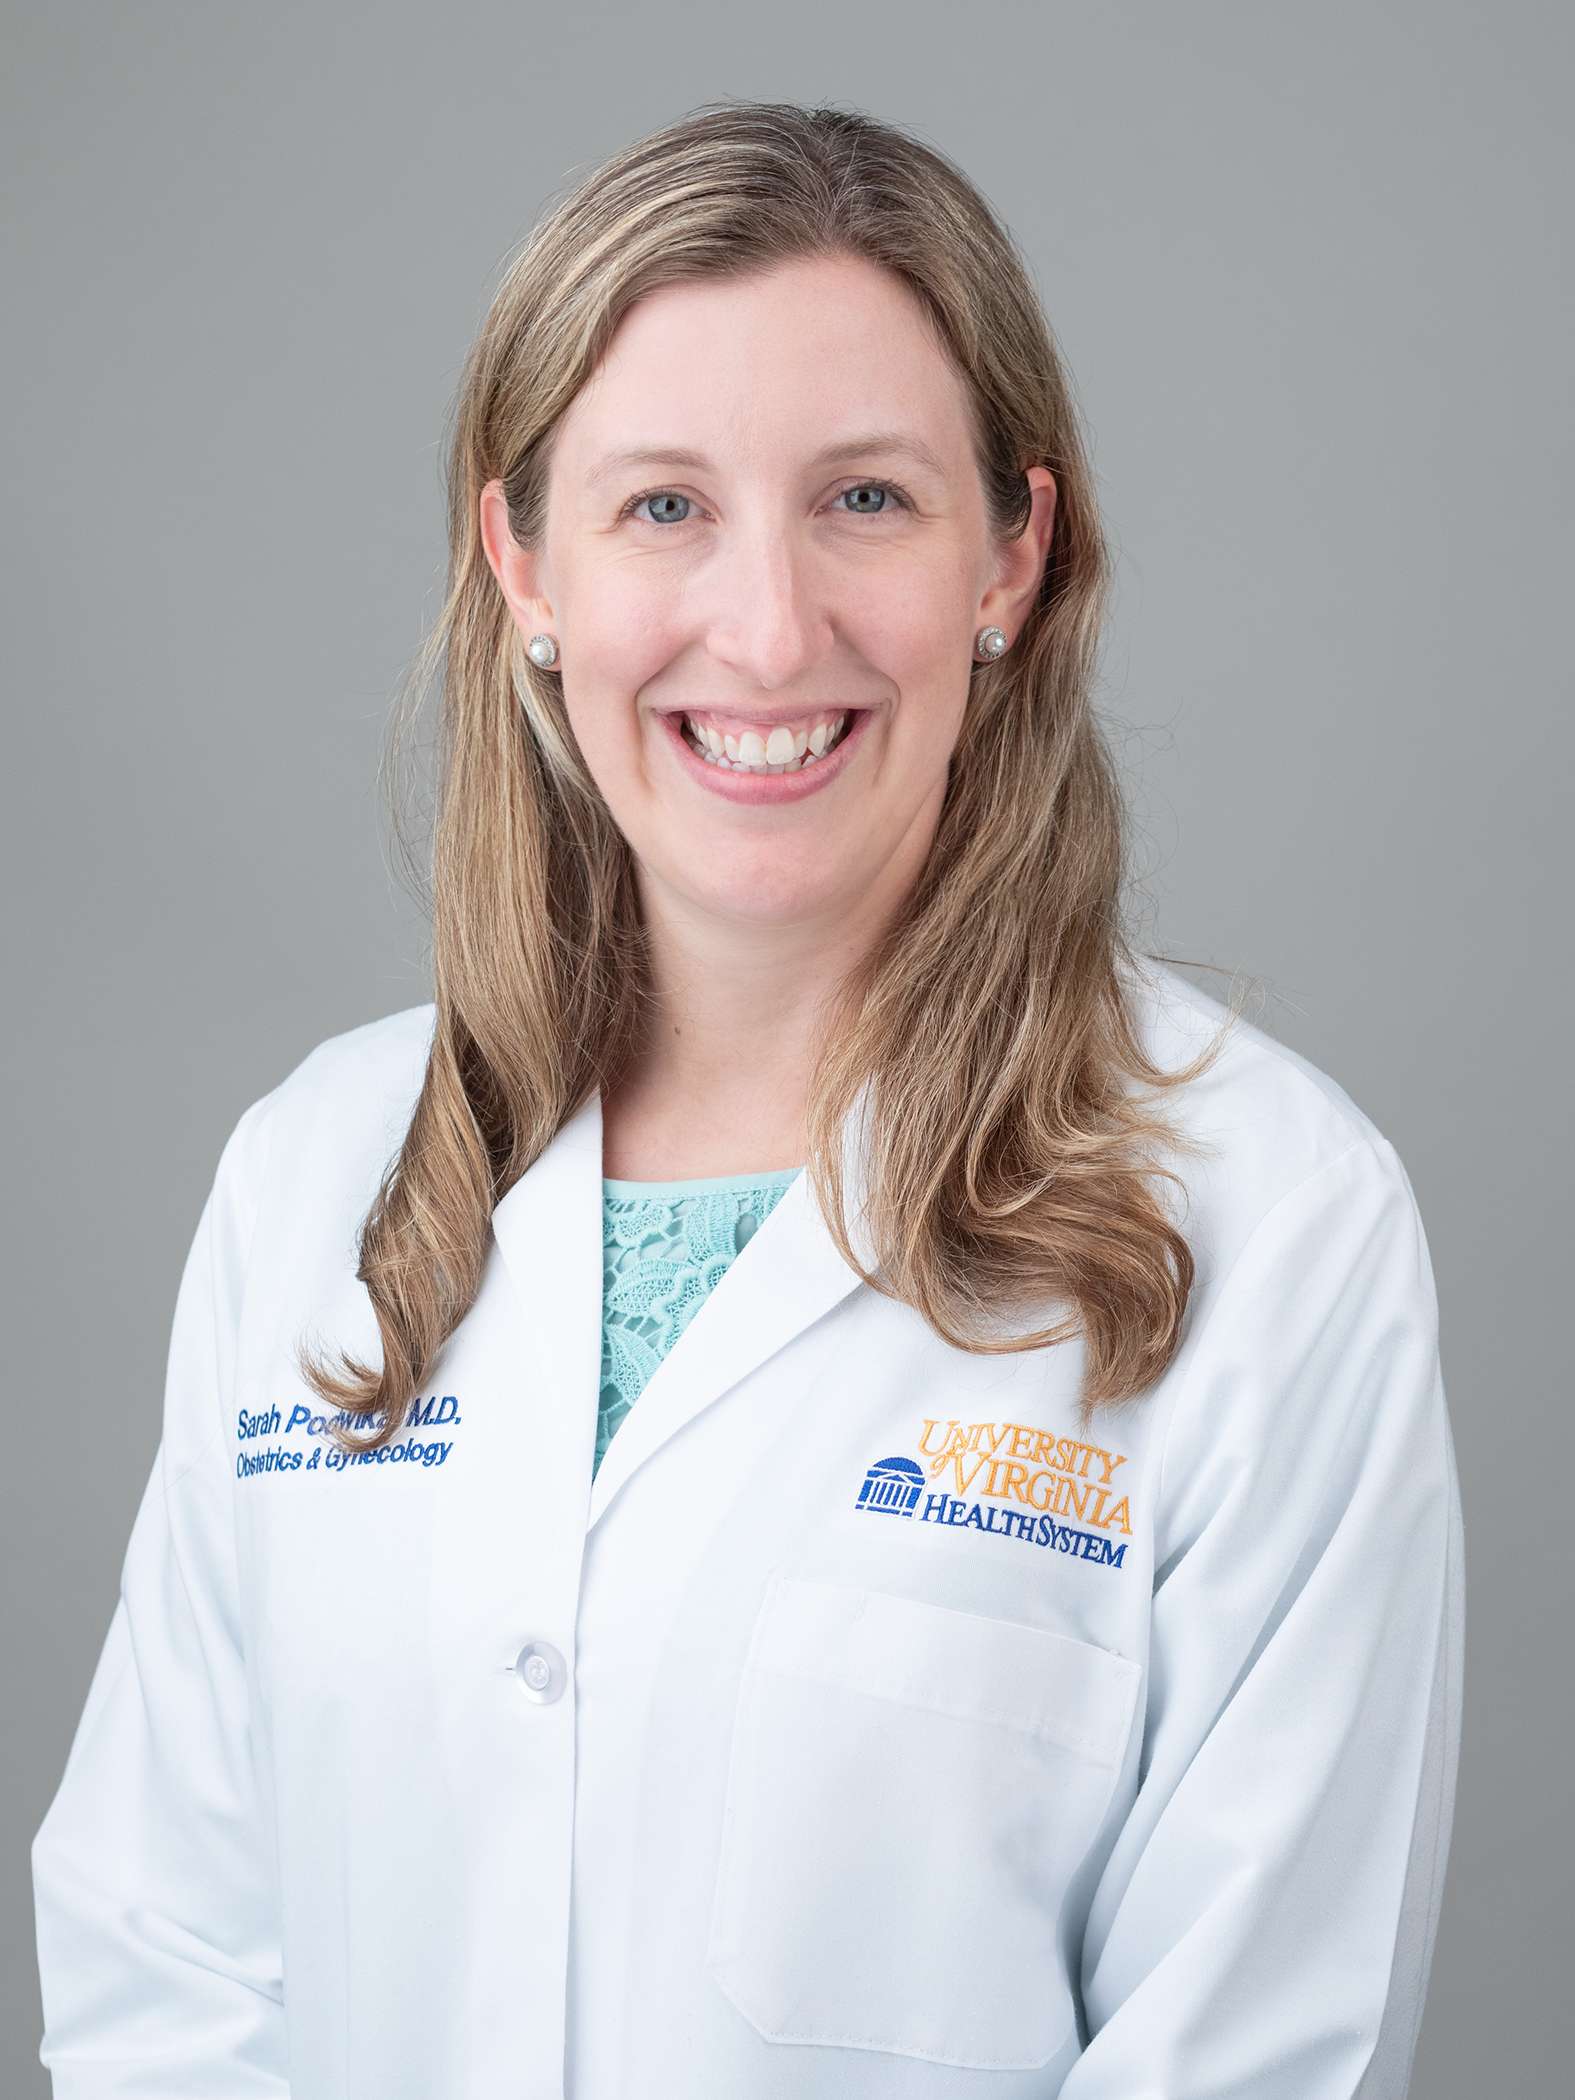 Sarah Podwika, MD - OB/GYN UVA resident physician